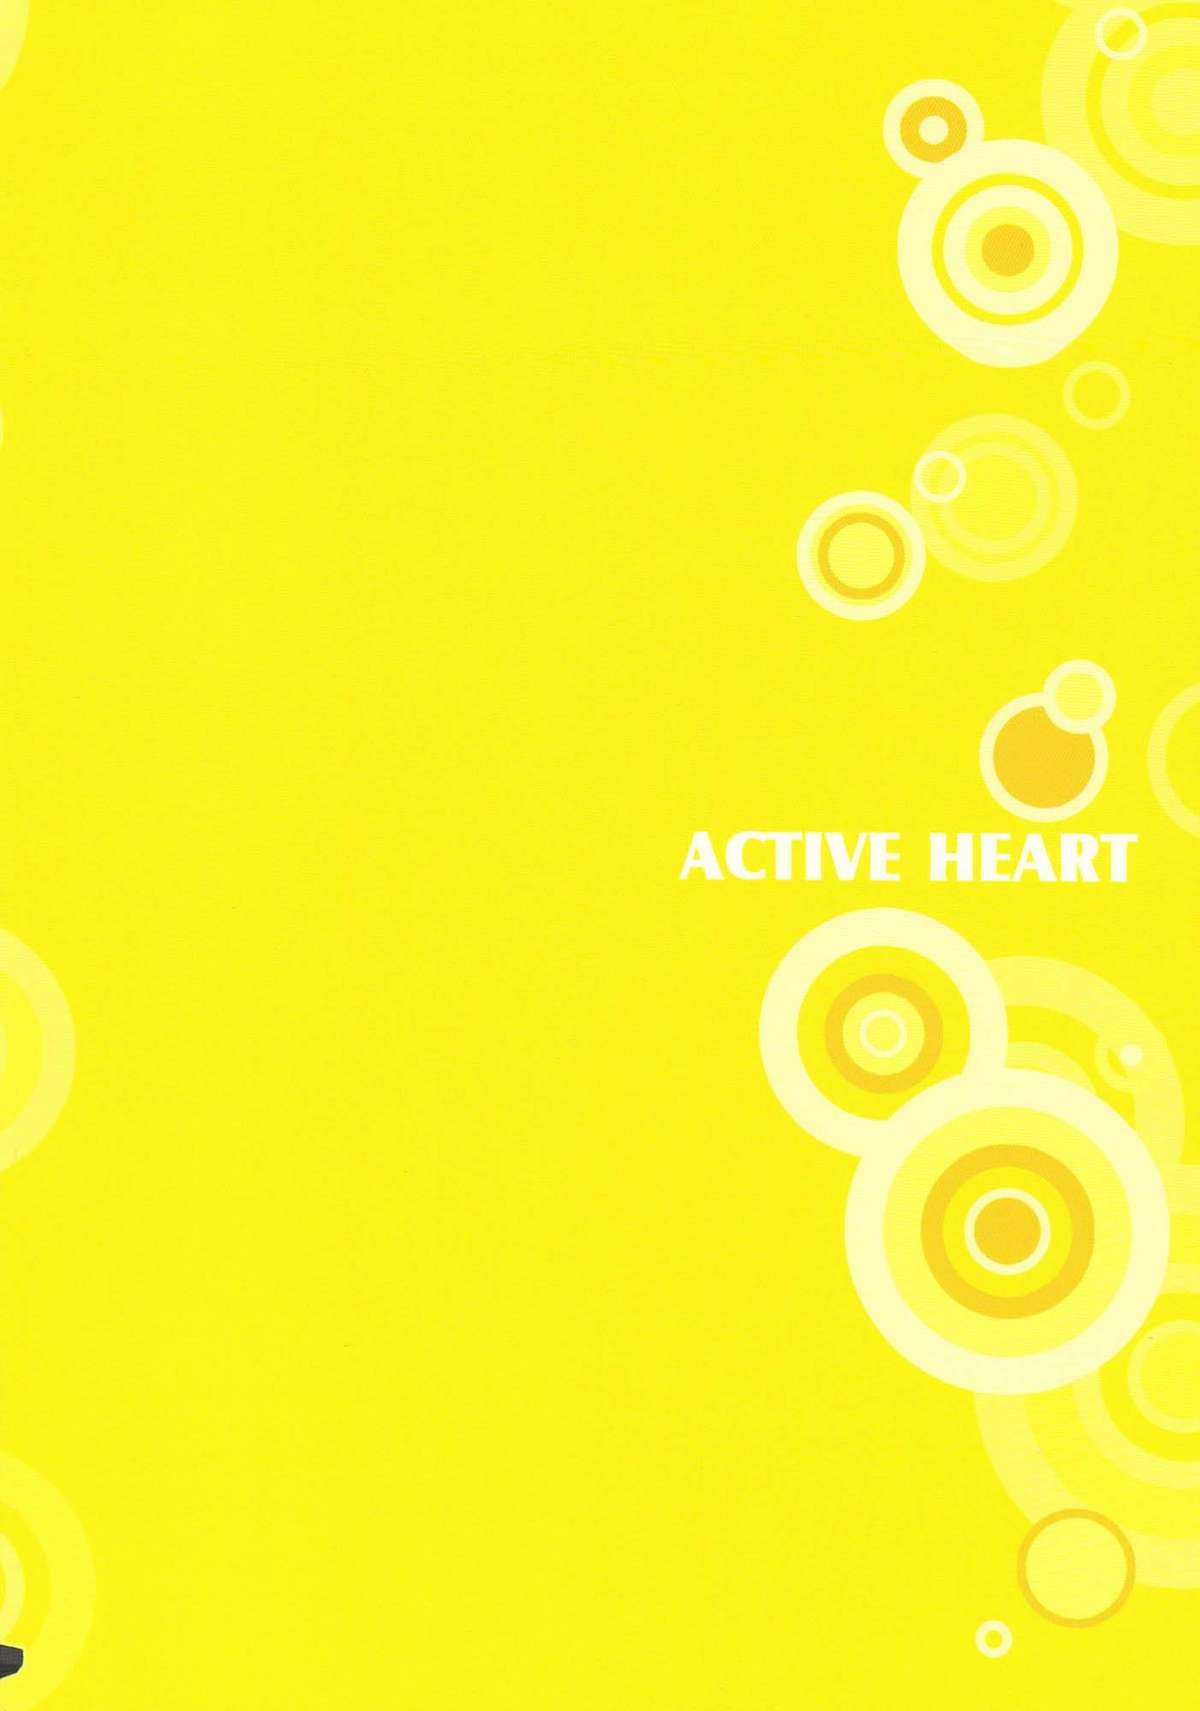 [Pied a Terre] Active Heart (D.Gray-man) 